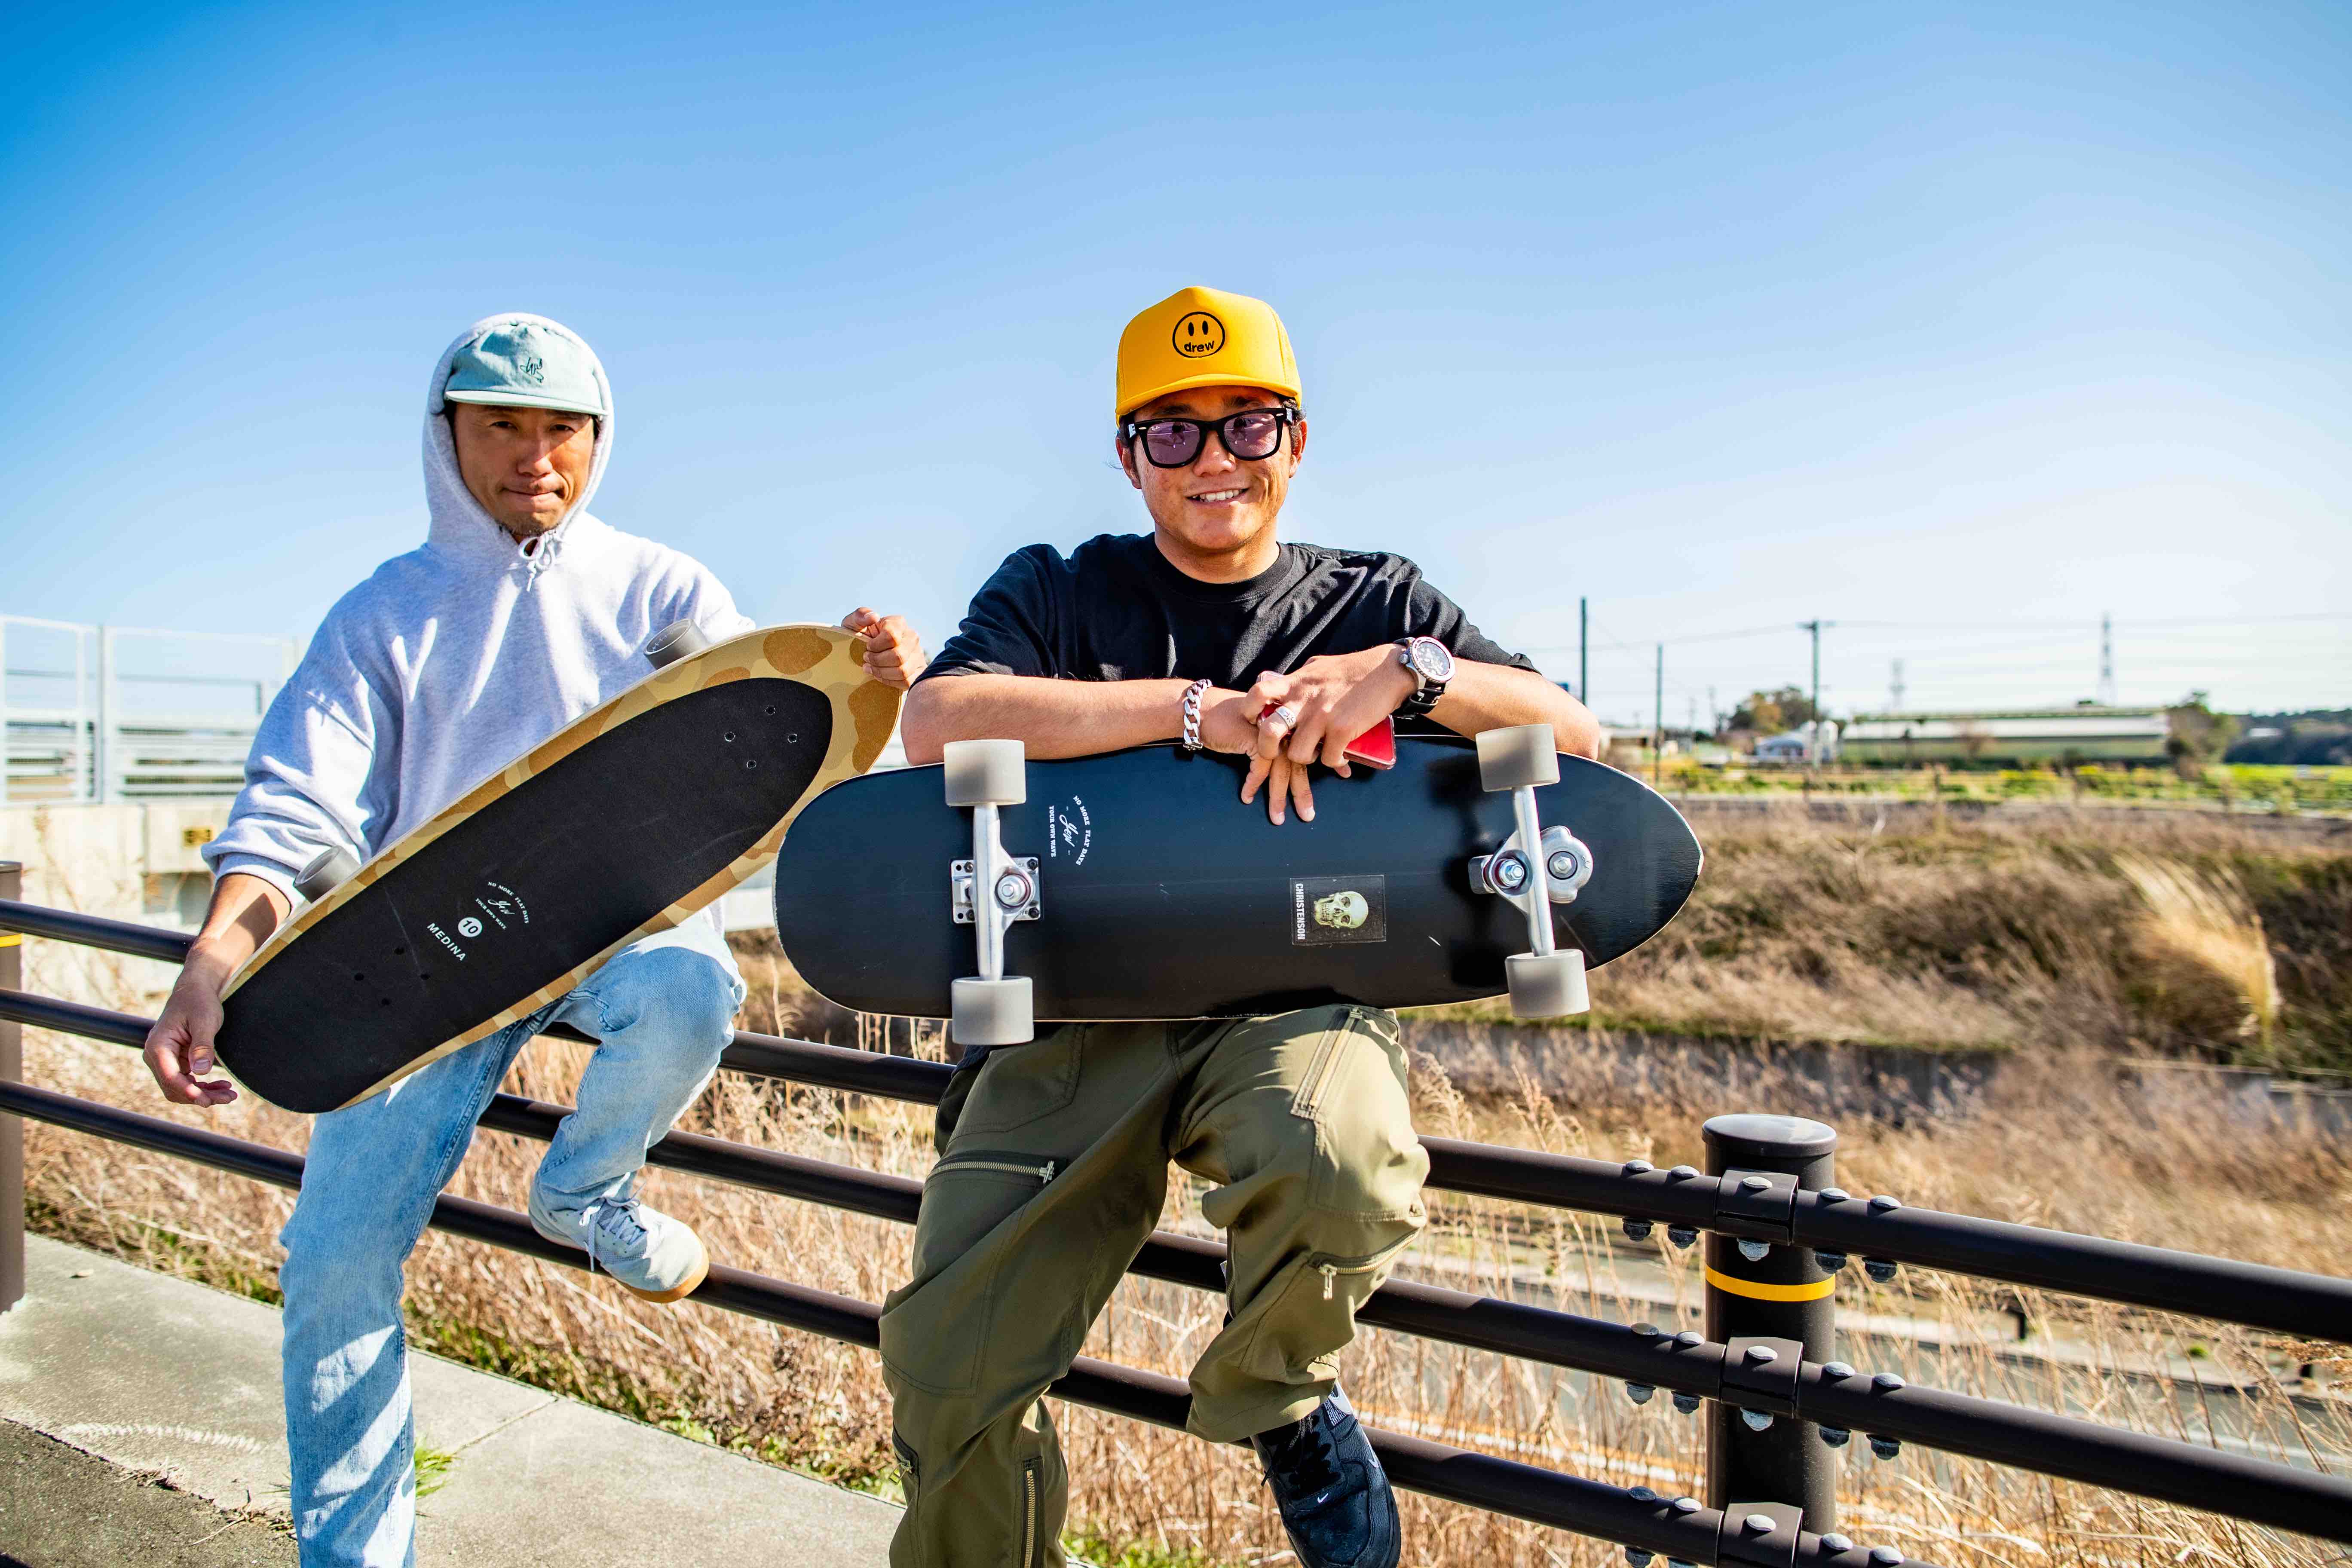 【SURFSKATE】村田嵐がyow surfの最新スケートボードで伊良湖のサーフスケートスポットを巡るコンクリート・サーフセッション